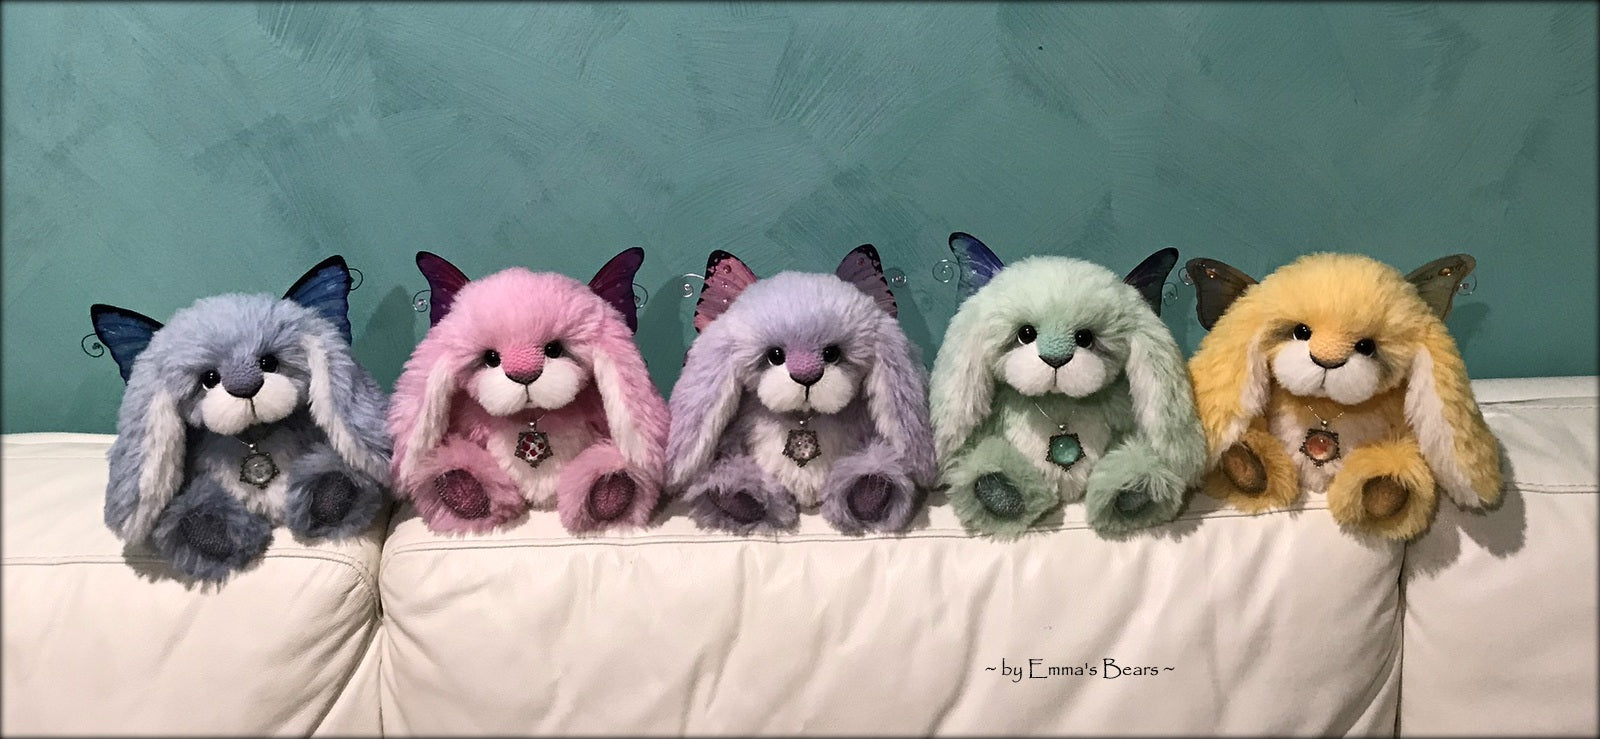 Clover - 9" Hand dyed alpaca artist Easter Bunny by Emma's Bears - OOAK